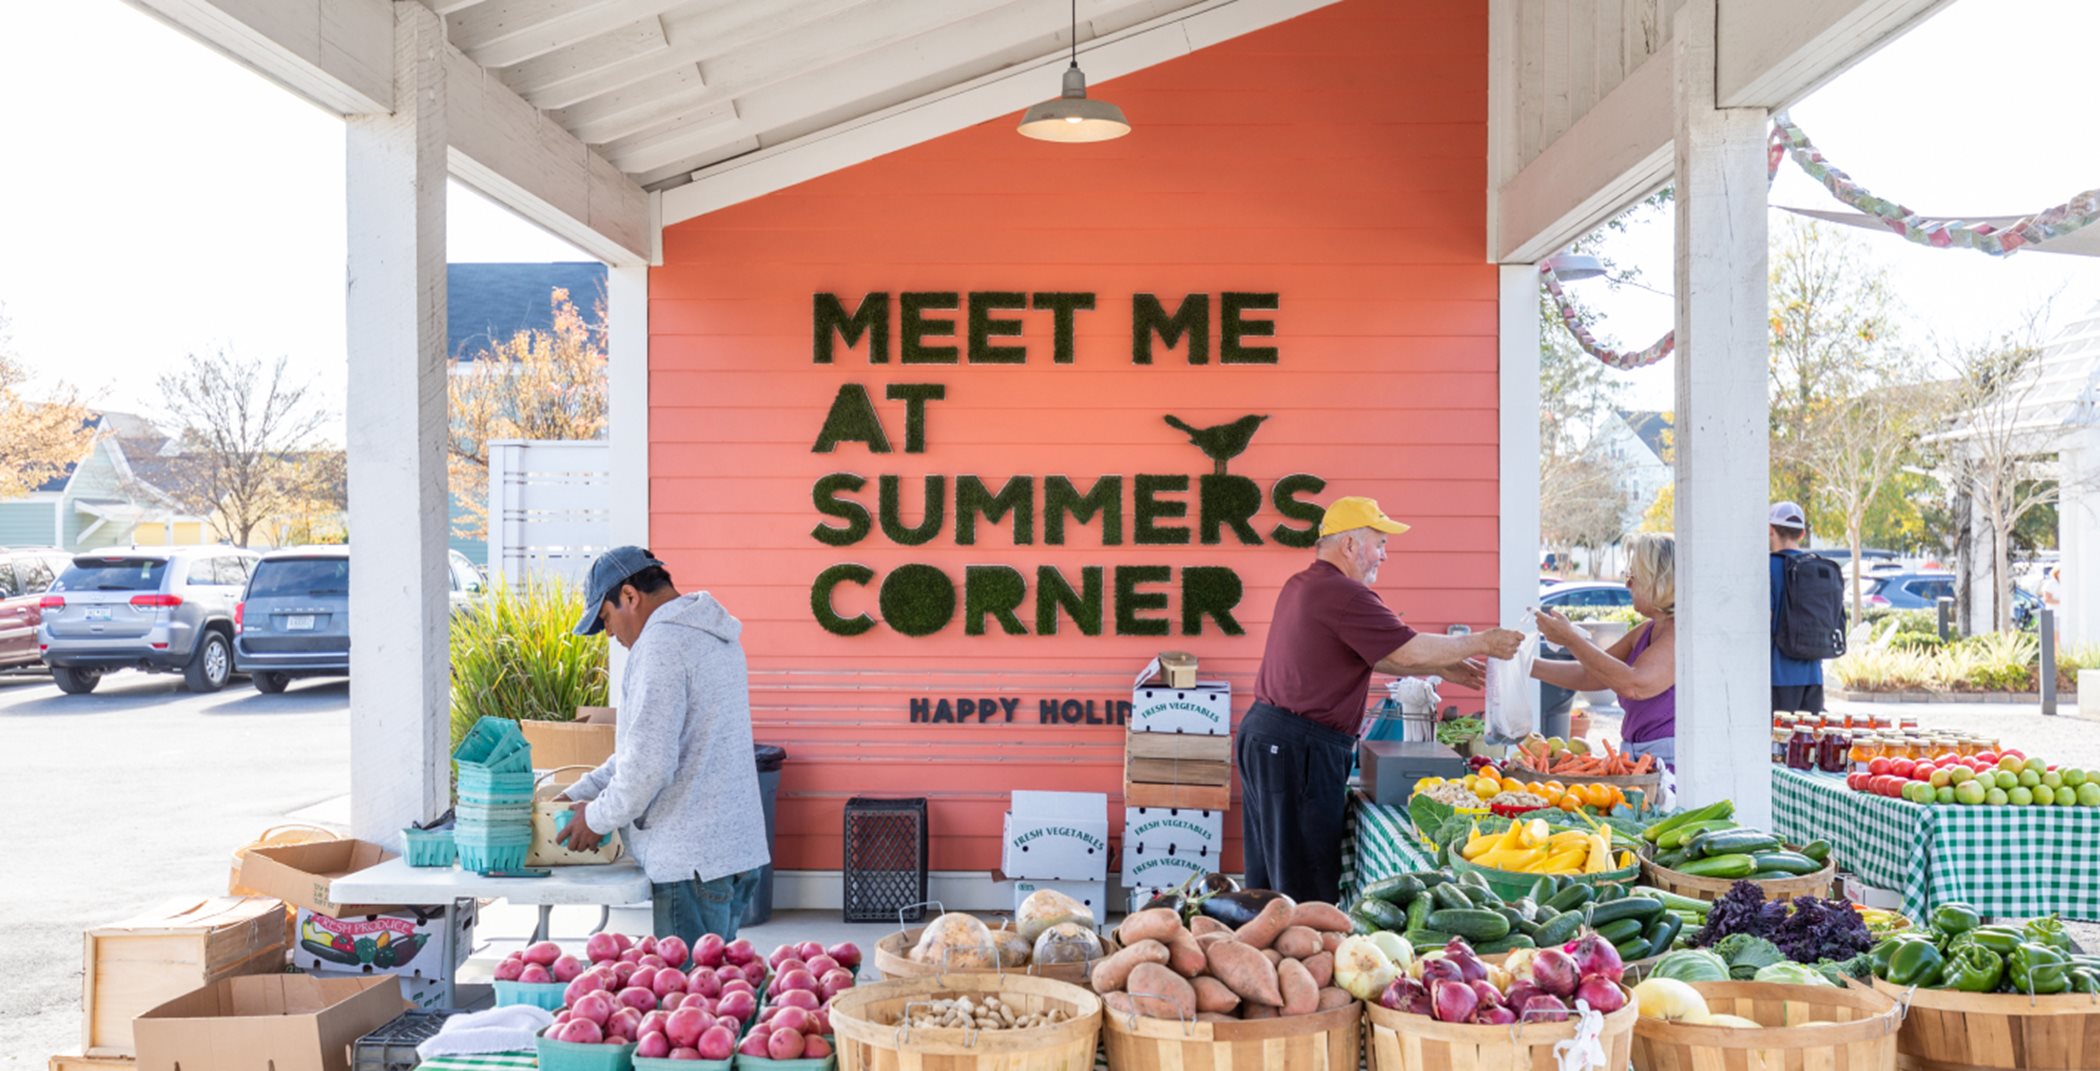 Summers Corner farmer's market